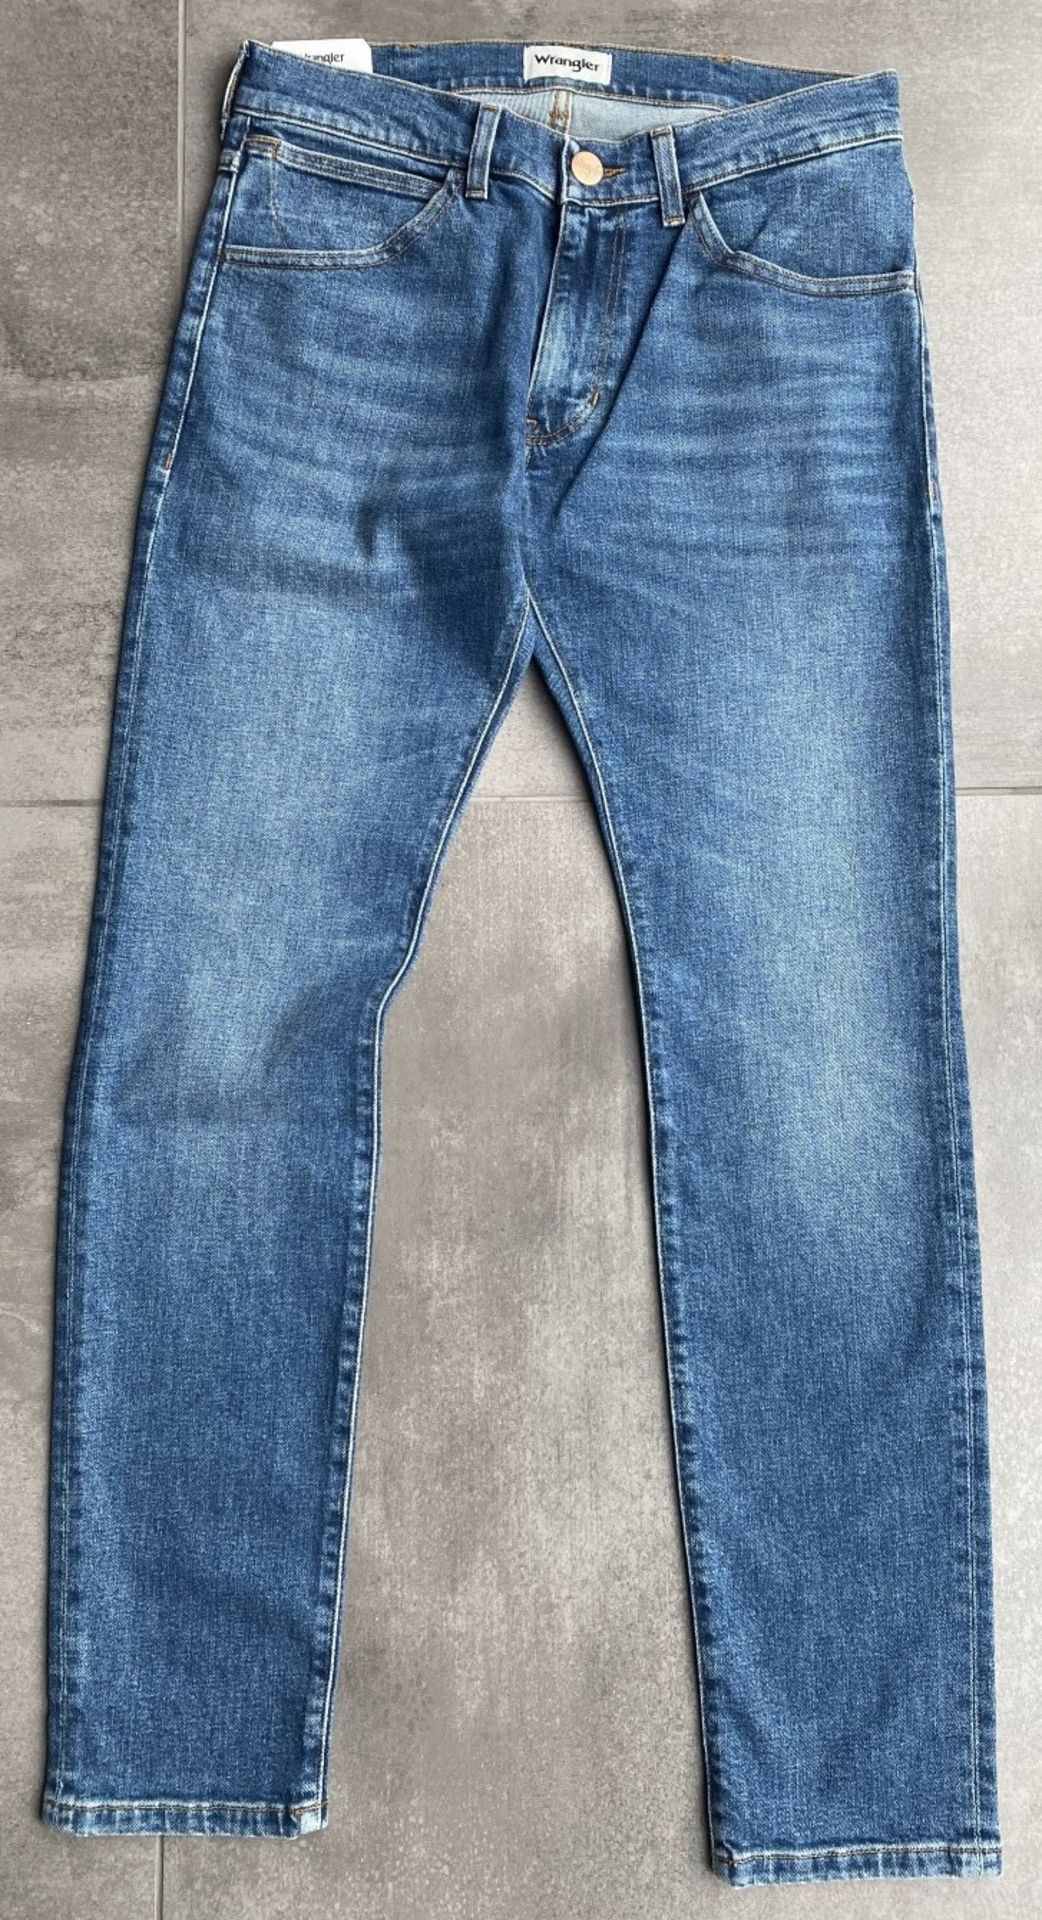 1 x Pair Of Men's Genuine Wrangler BRYSON Skinny Jeans In Blue - Size: UK 30/32 - Preowned, Like - Image 3 of 10